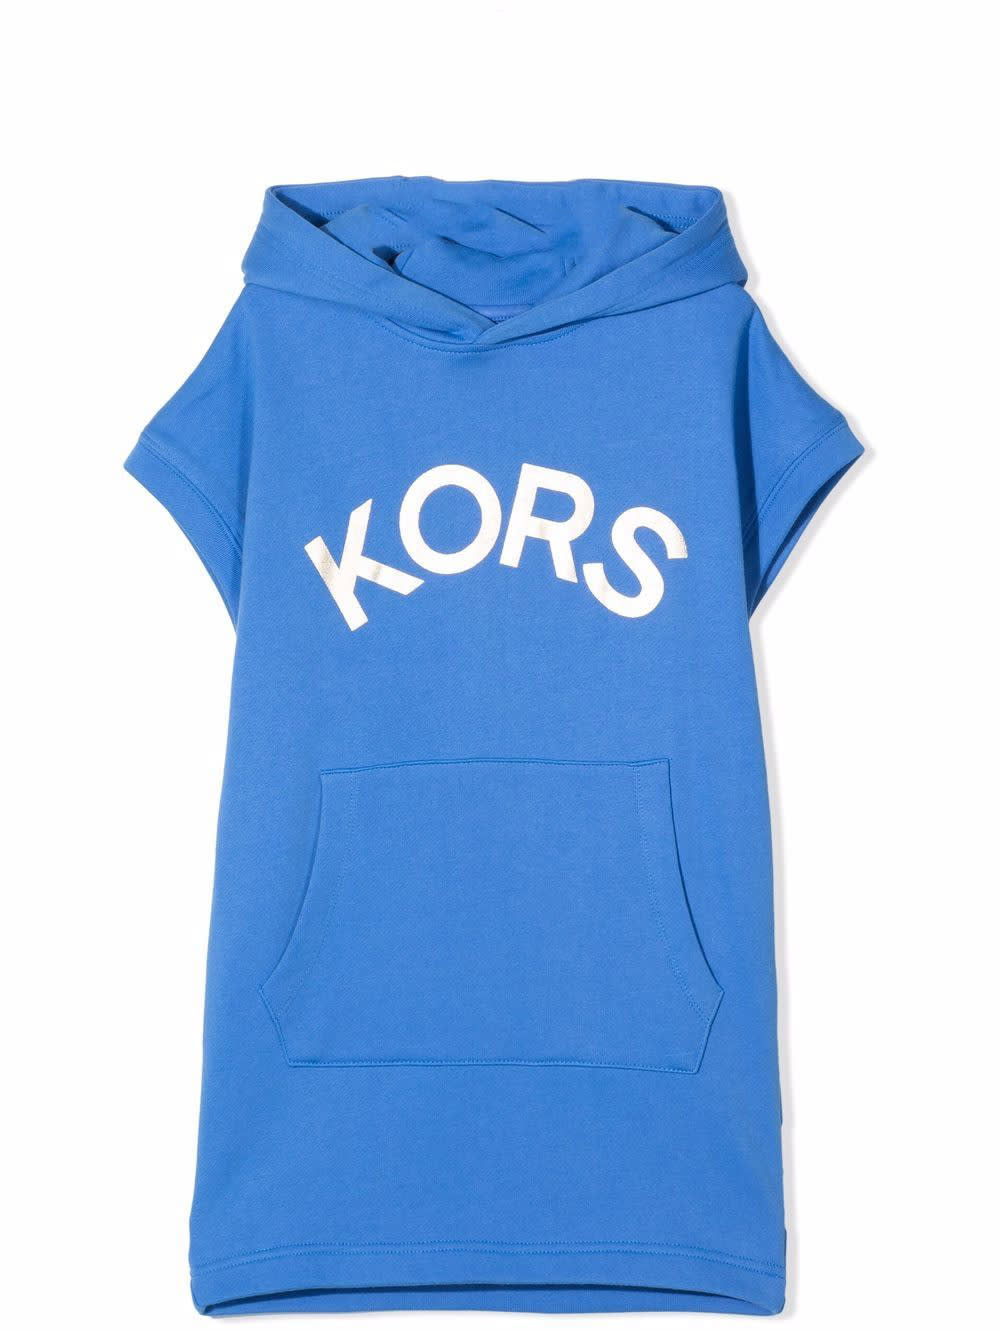 Michael Kors Sweatshirt Dress With Print